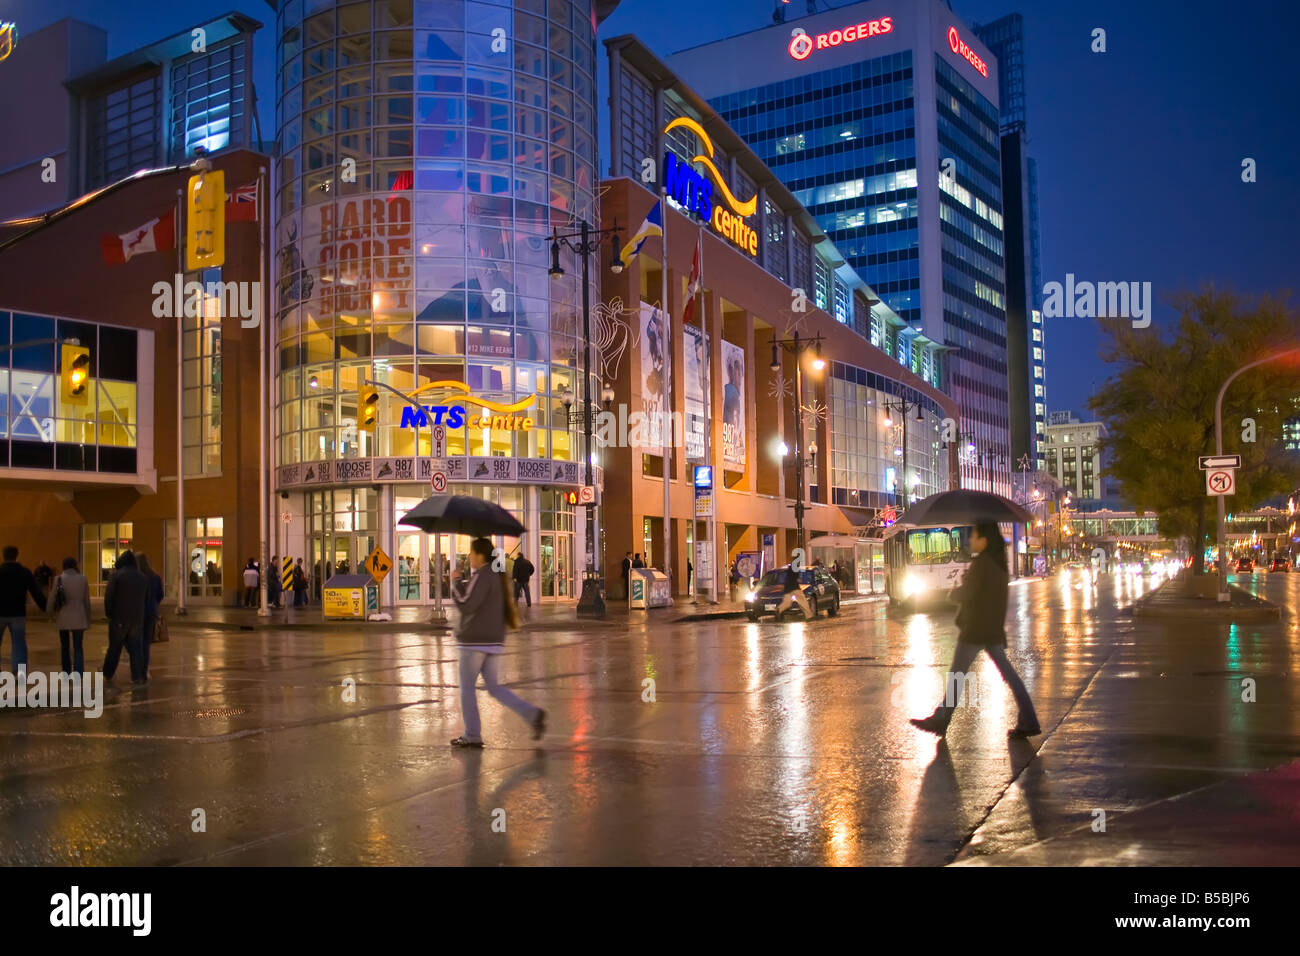 Pedestrians crossing a city street on a rainy night, carrying umbrellas, Portage Avenue, Winnipeg, Manitoba, Canada. Stock Photo